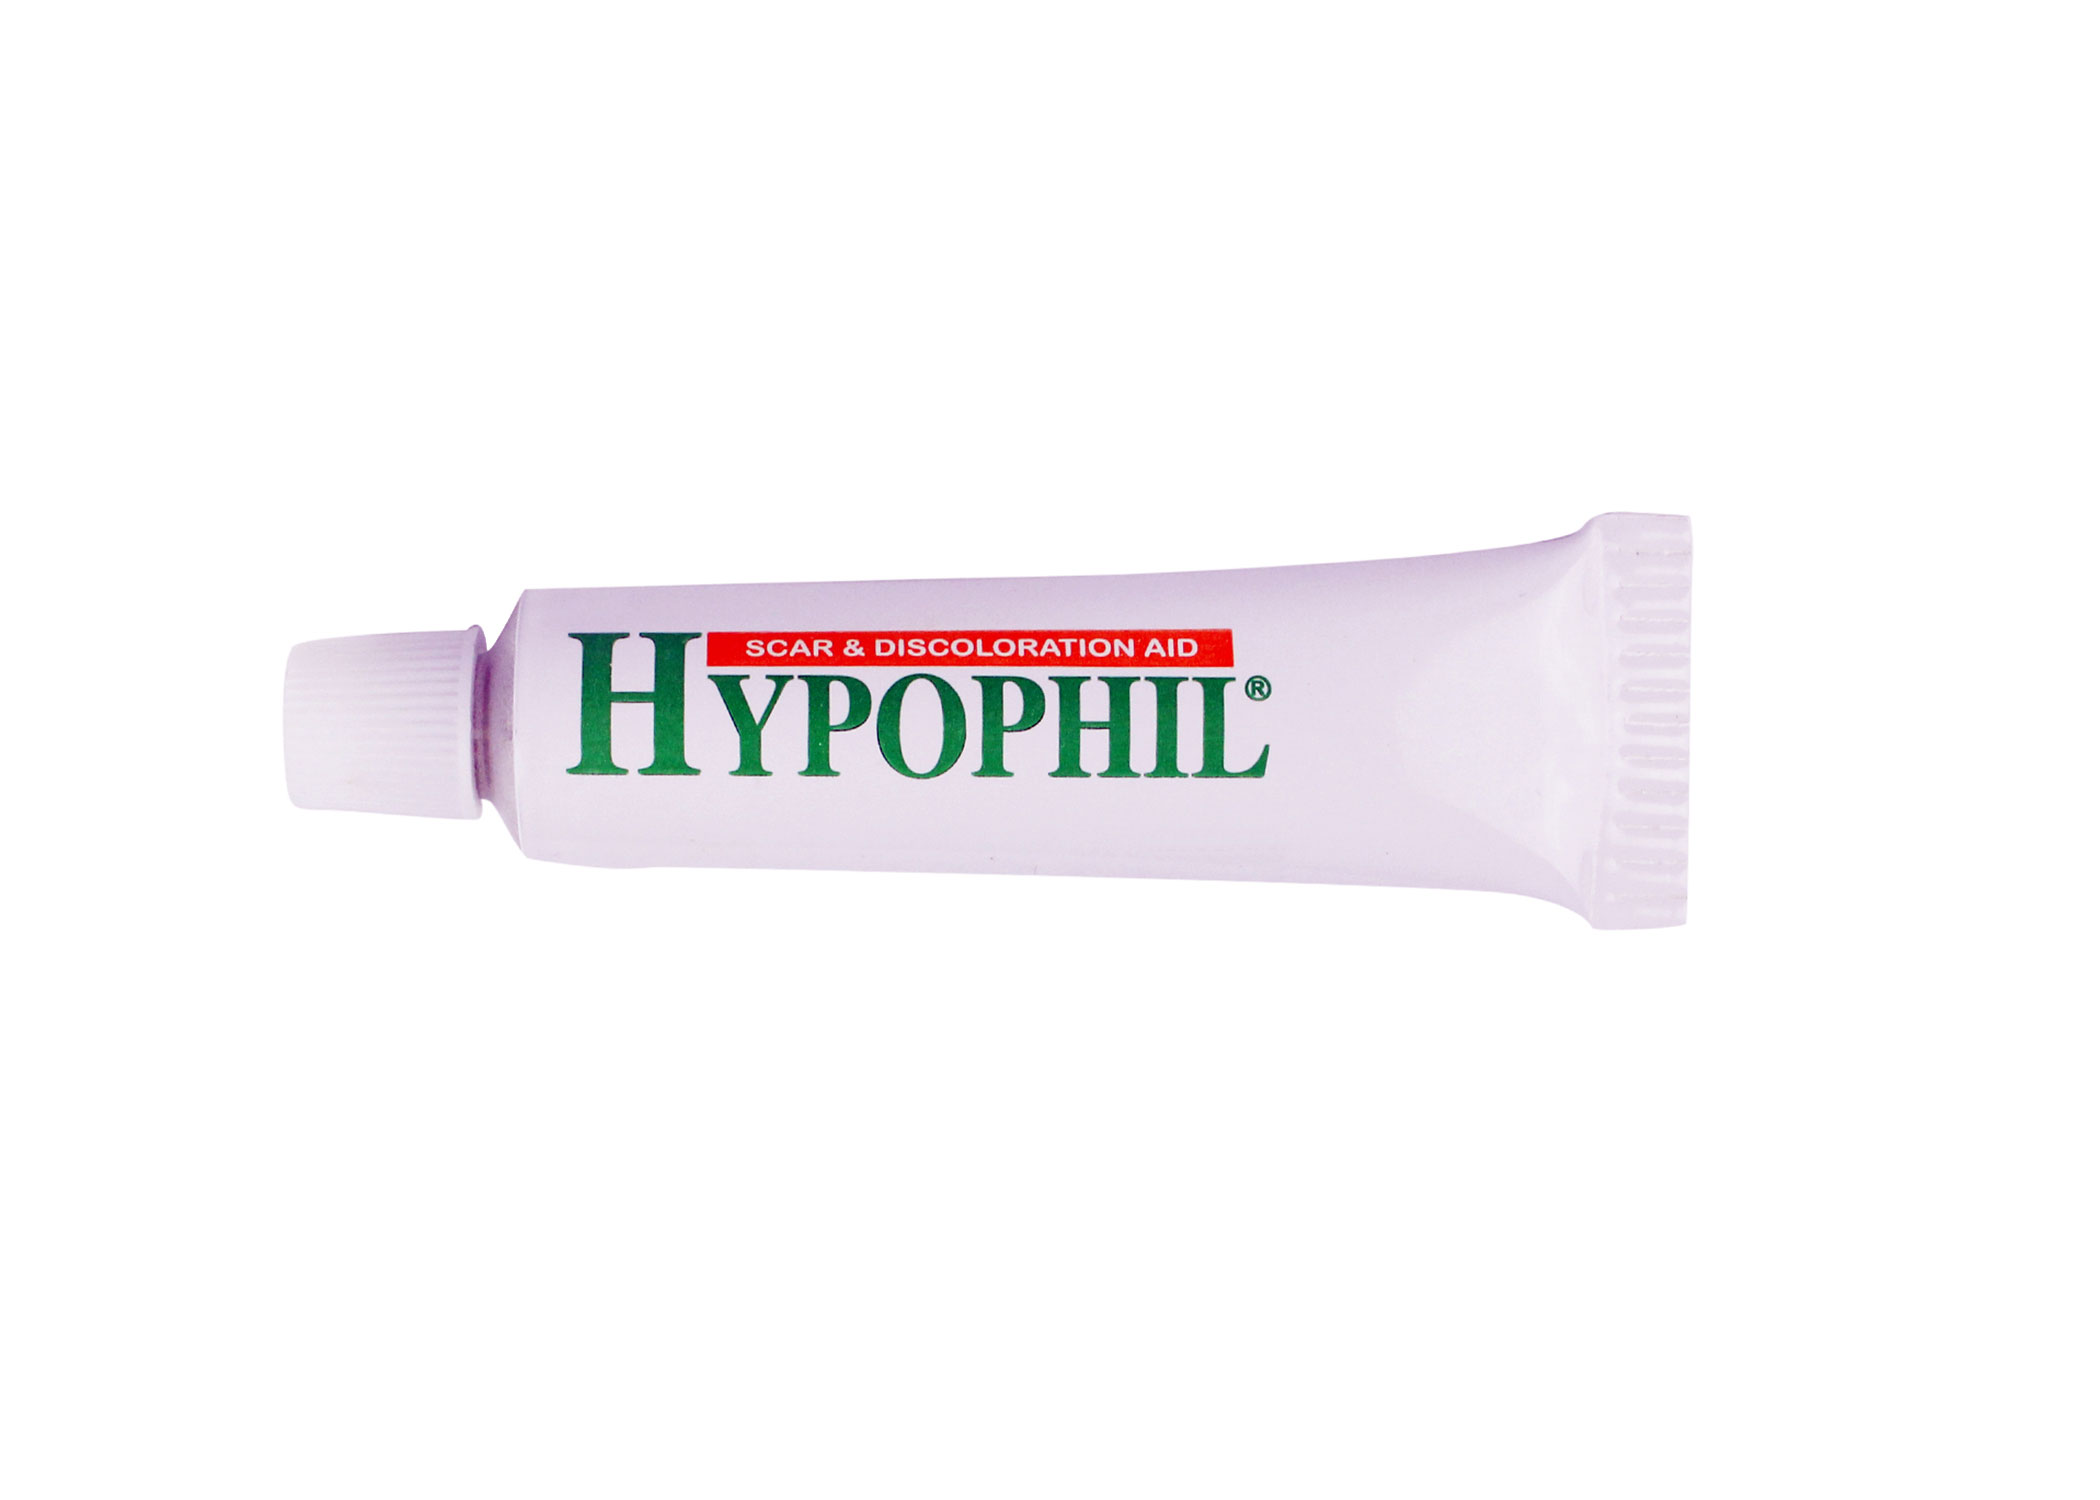 https://www.hypophil.com/wp-content/uploads/2013/06/Hypophil_3.jpg